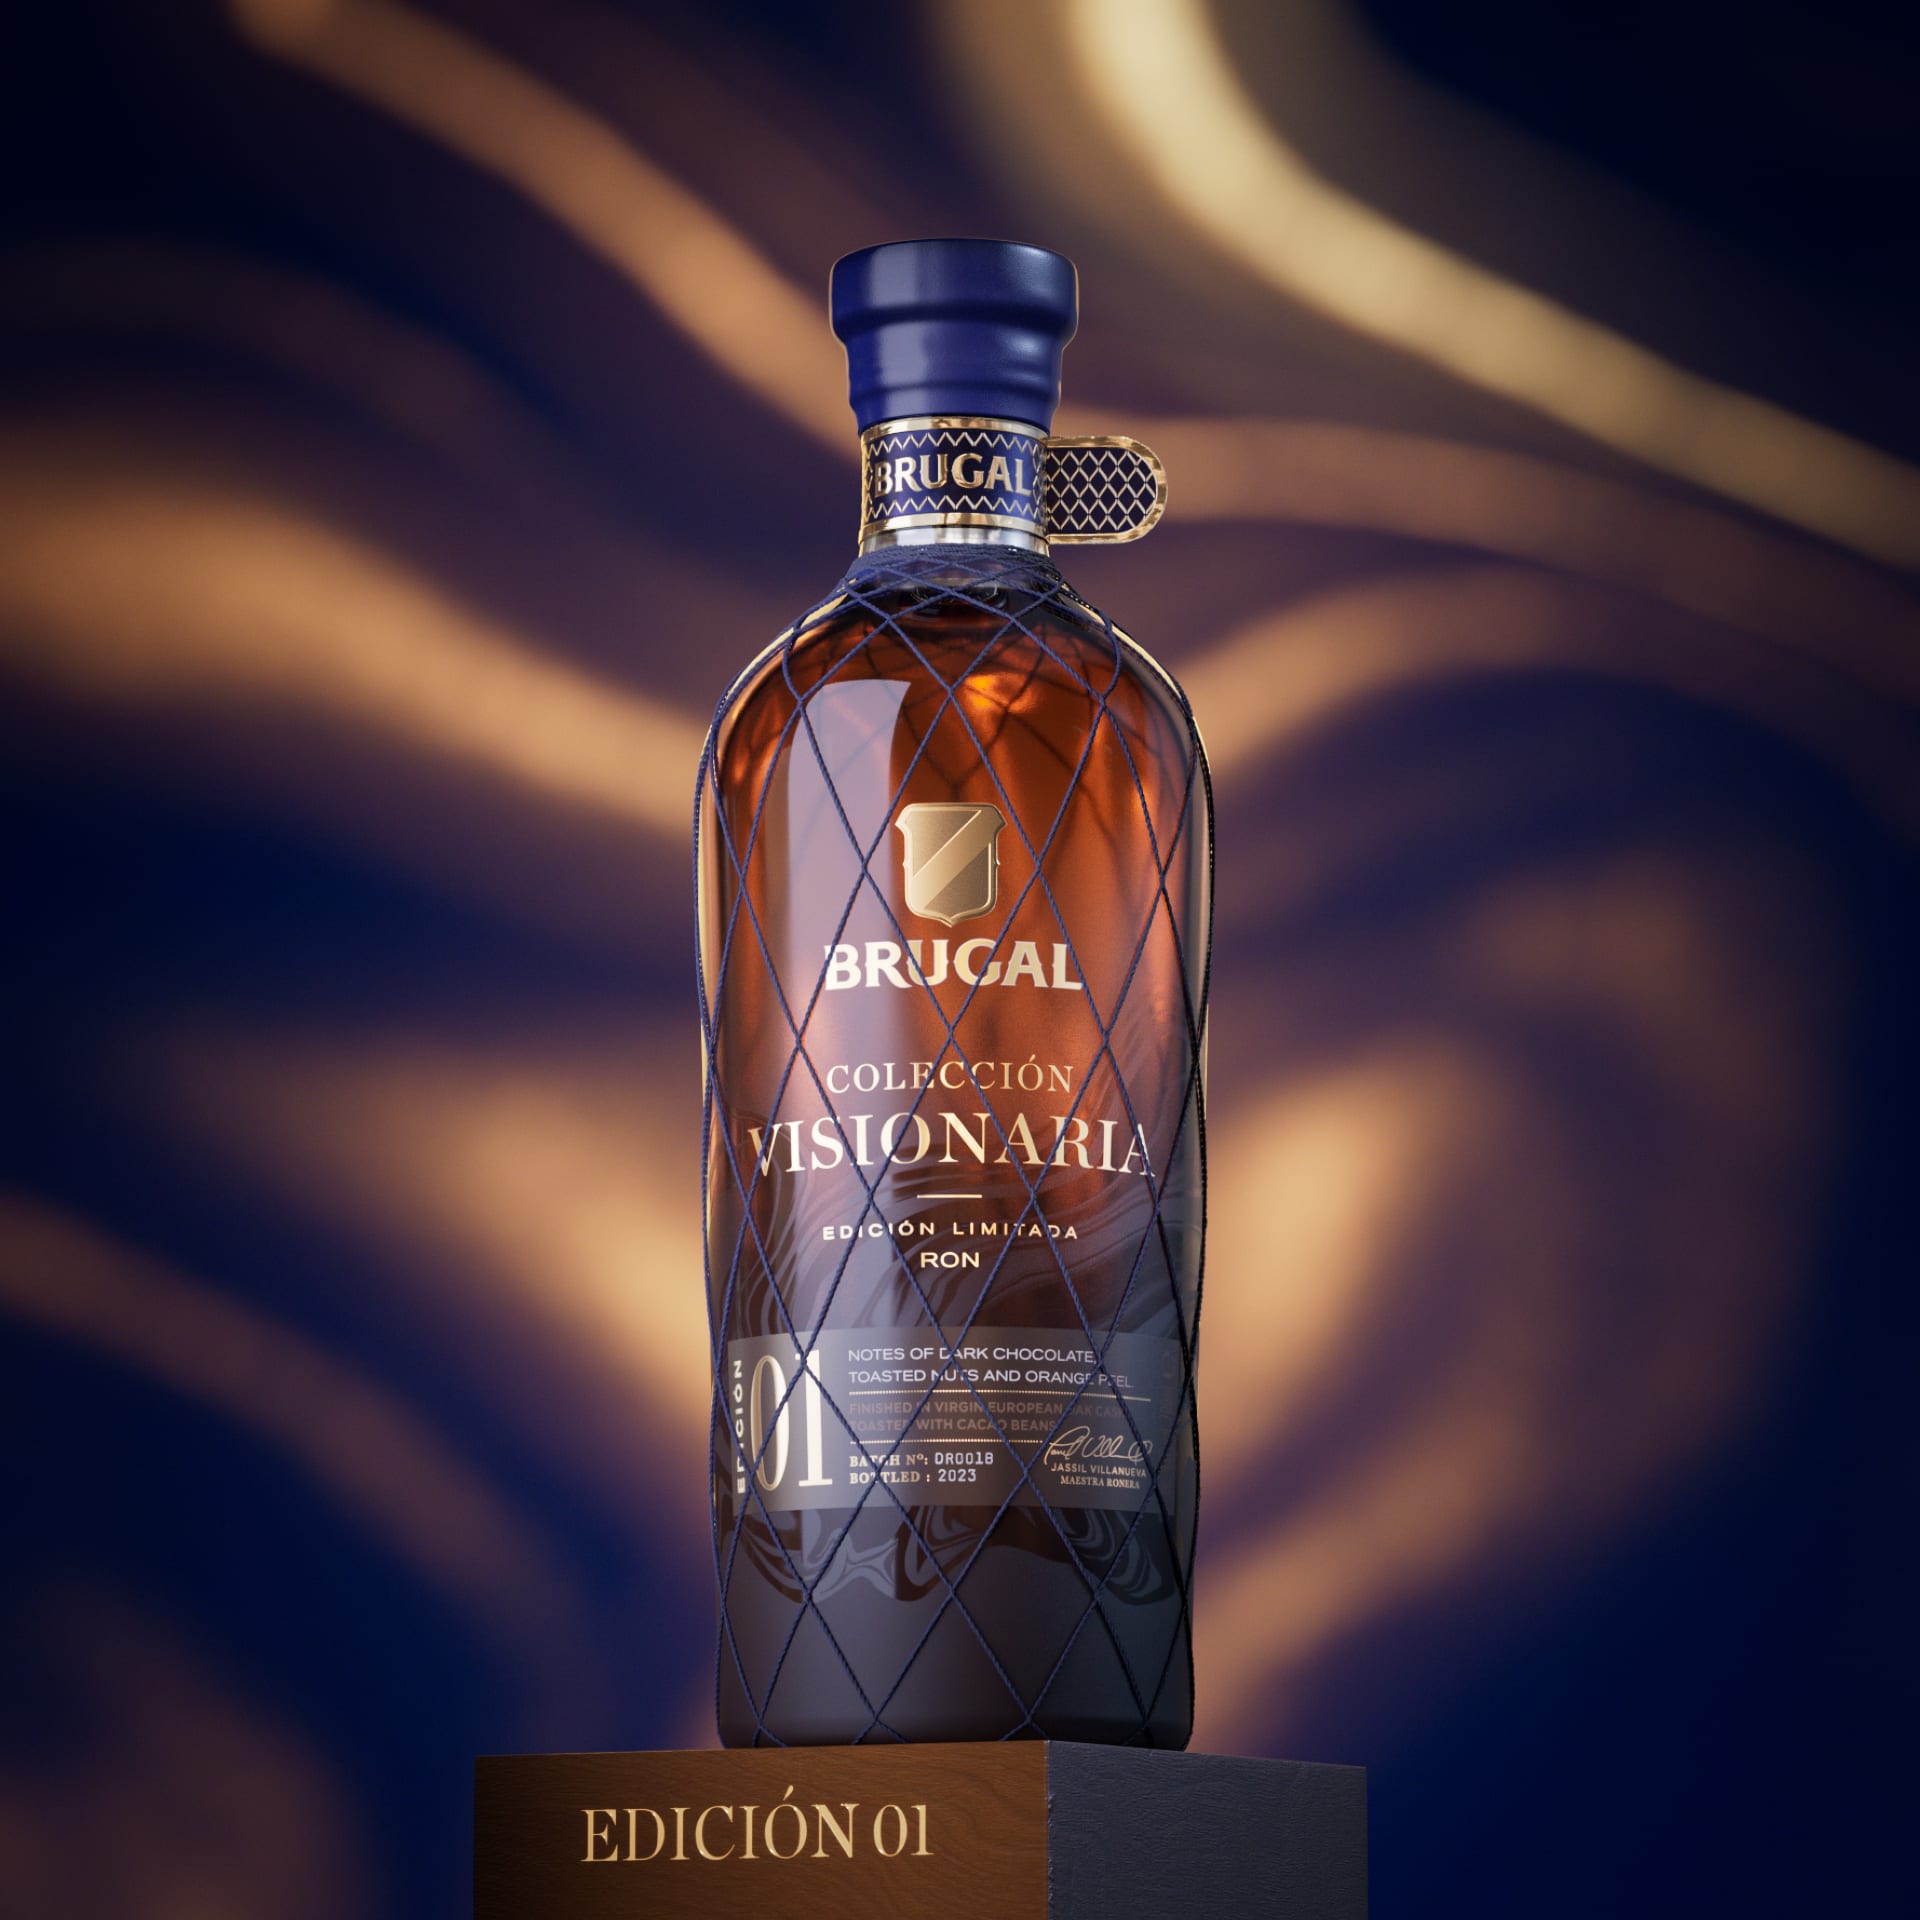 Limitovaná edice rumu značky Brugal